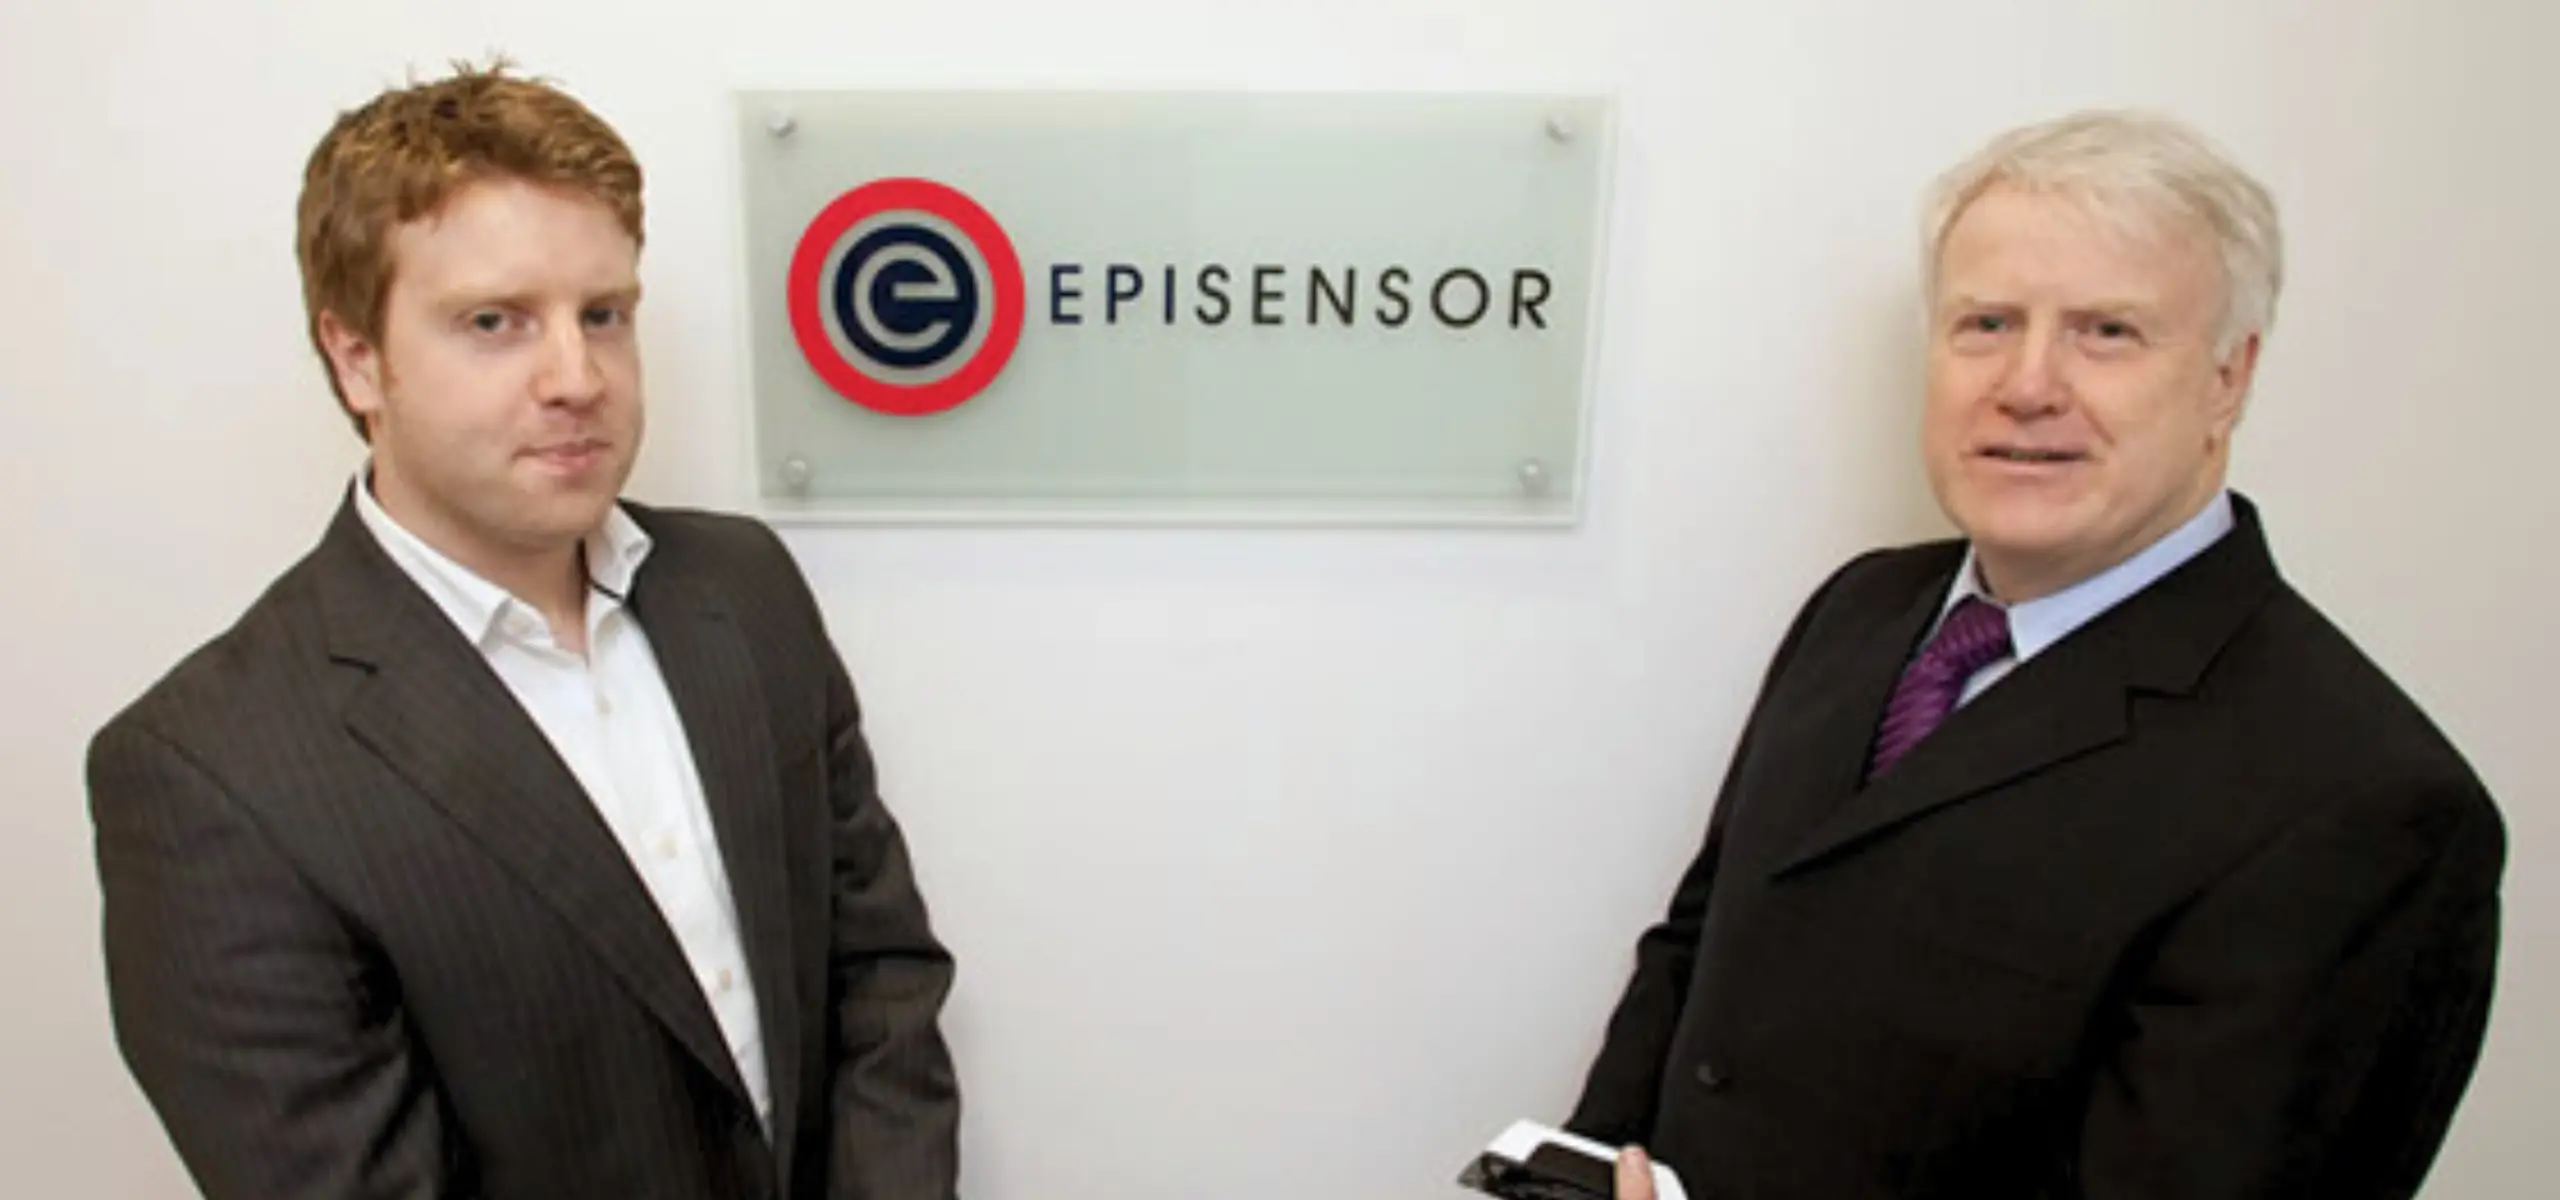 EpiSensor to create 10 new jobs with funding